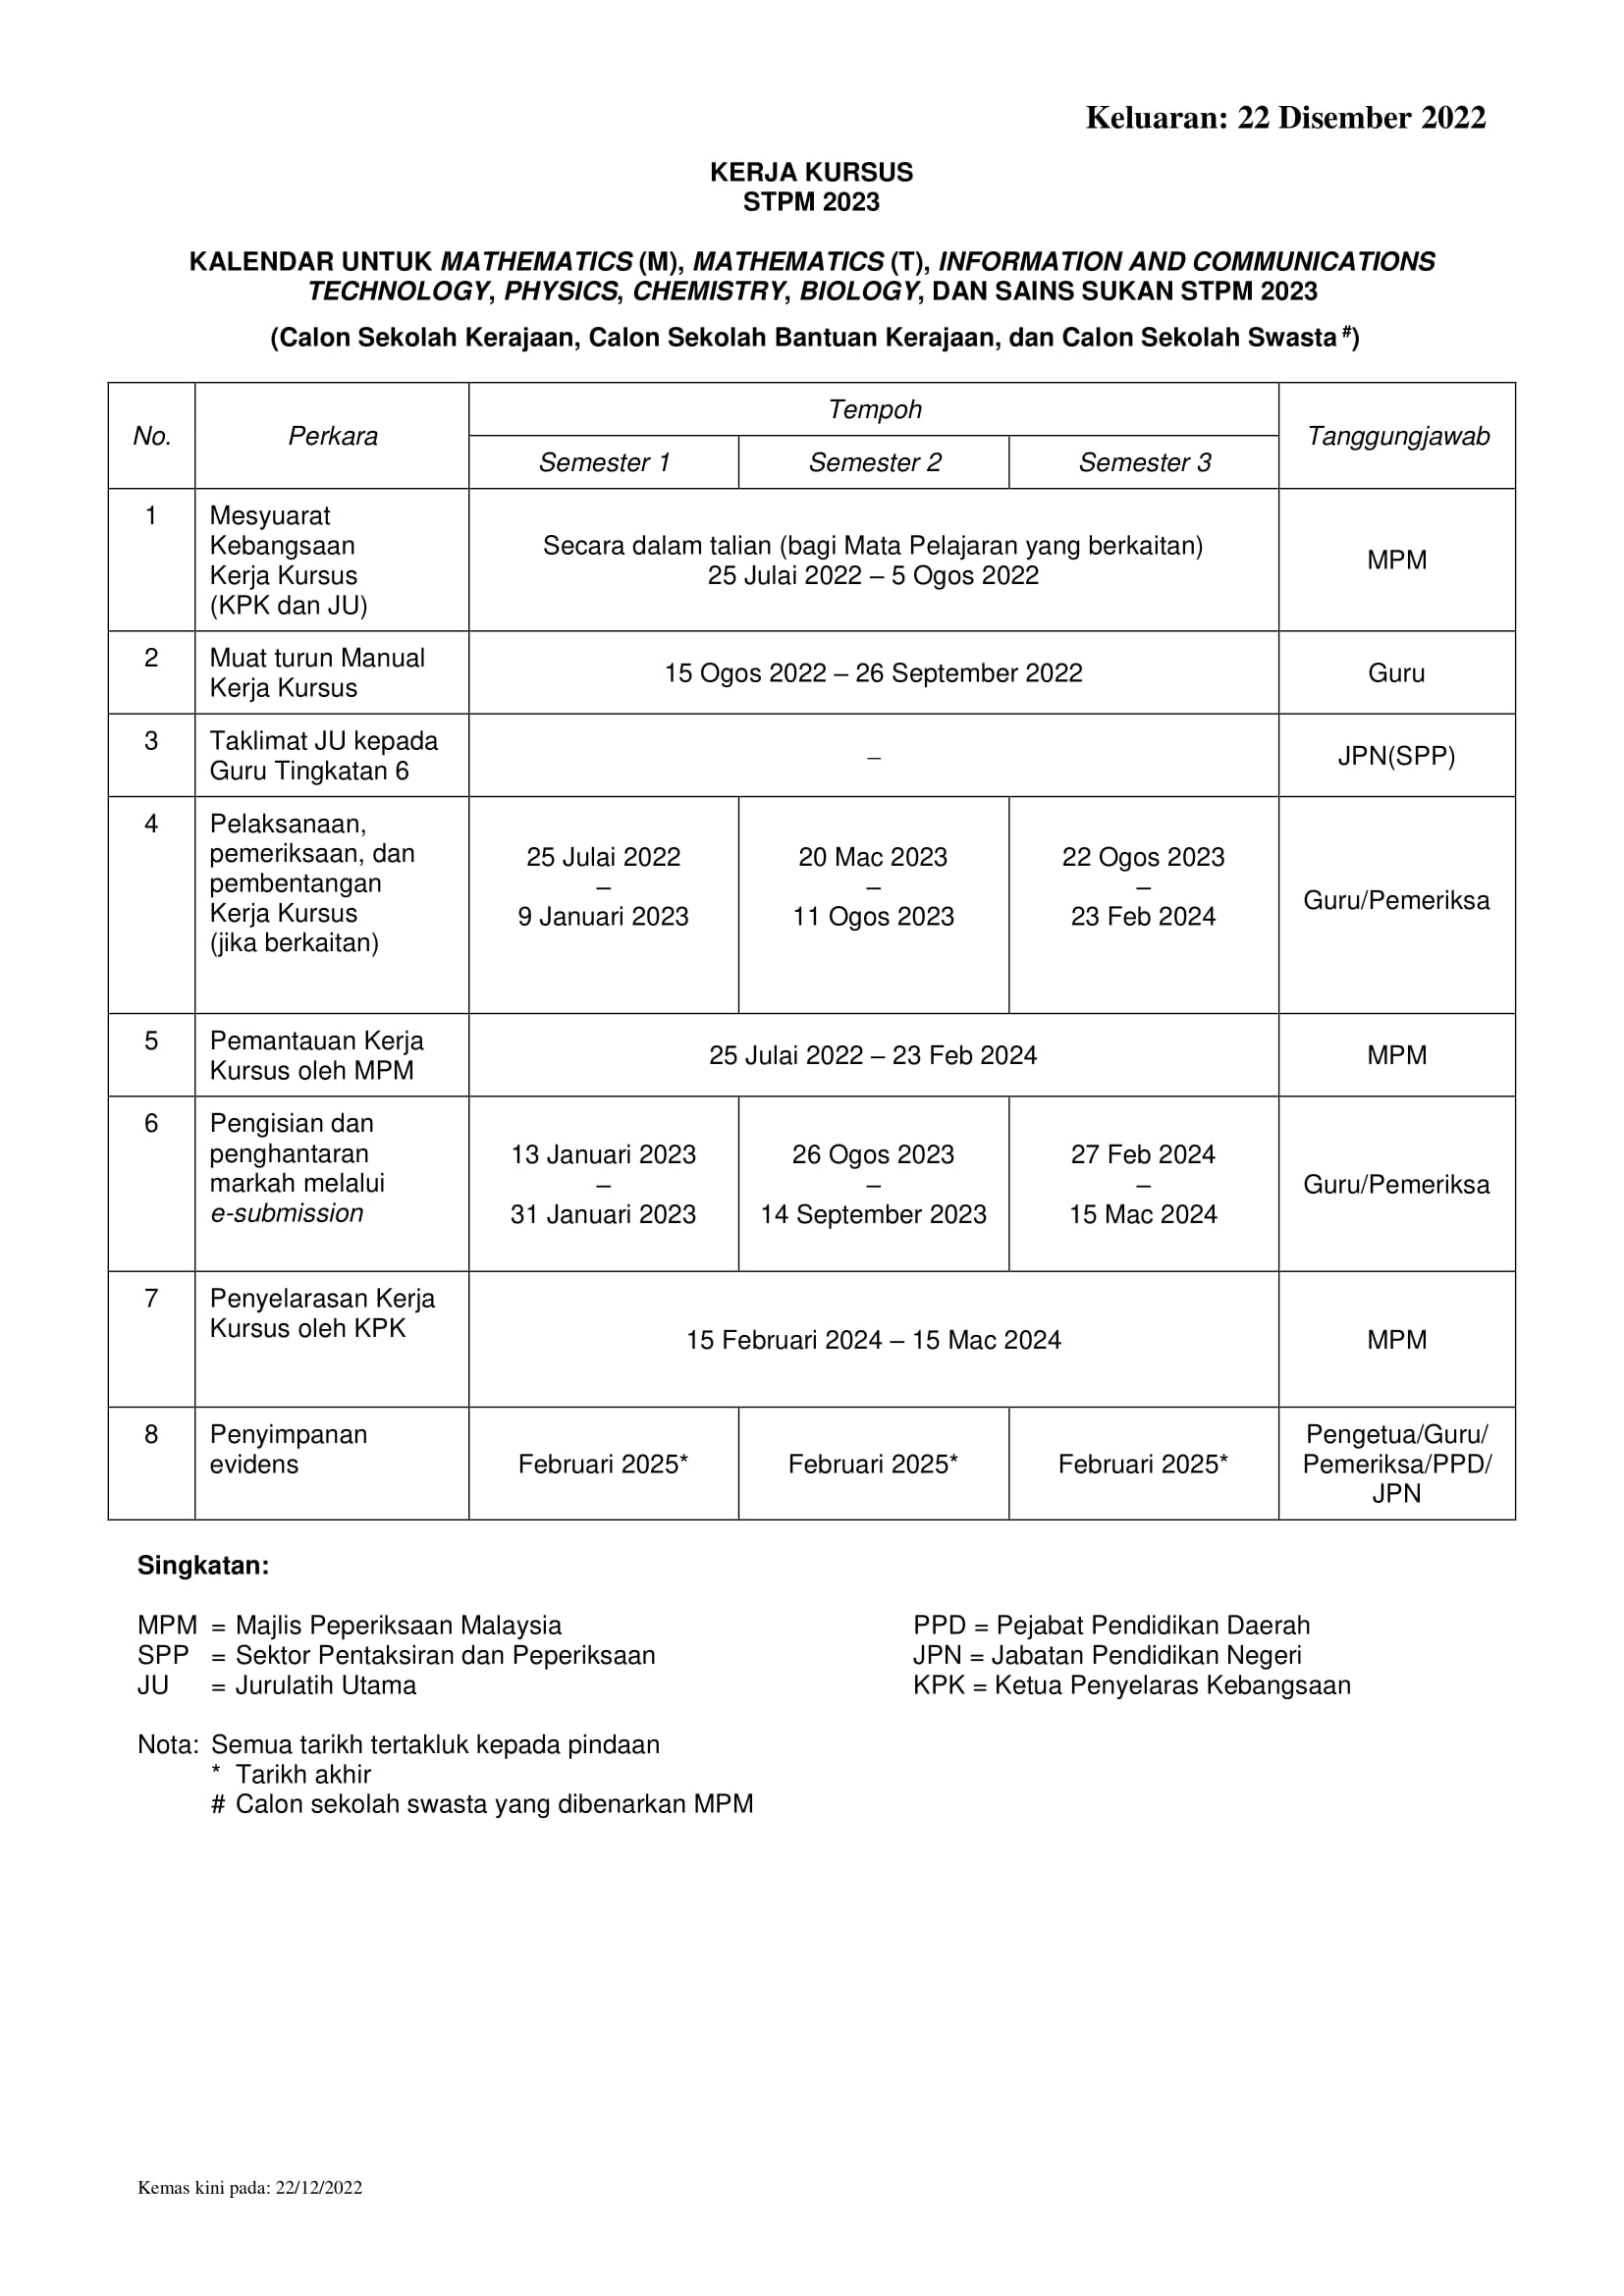 Kalendar Kerja Kursus STPM 2023 (Sains) Keluaran 22 Disember 2023